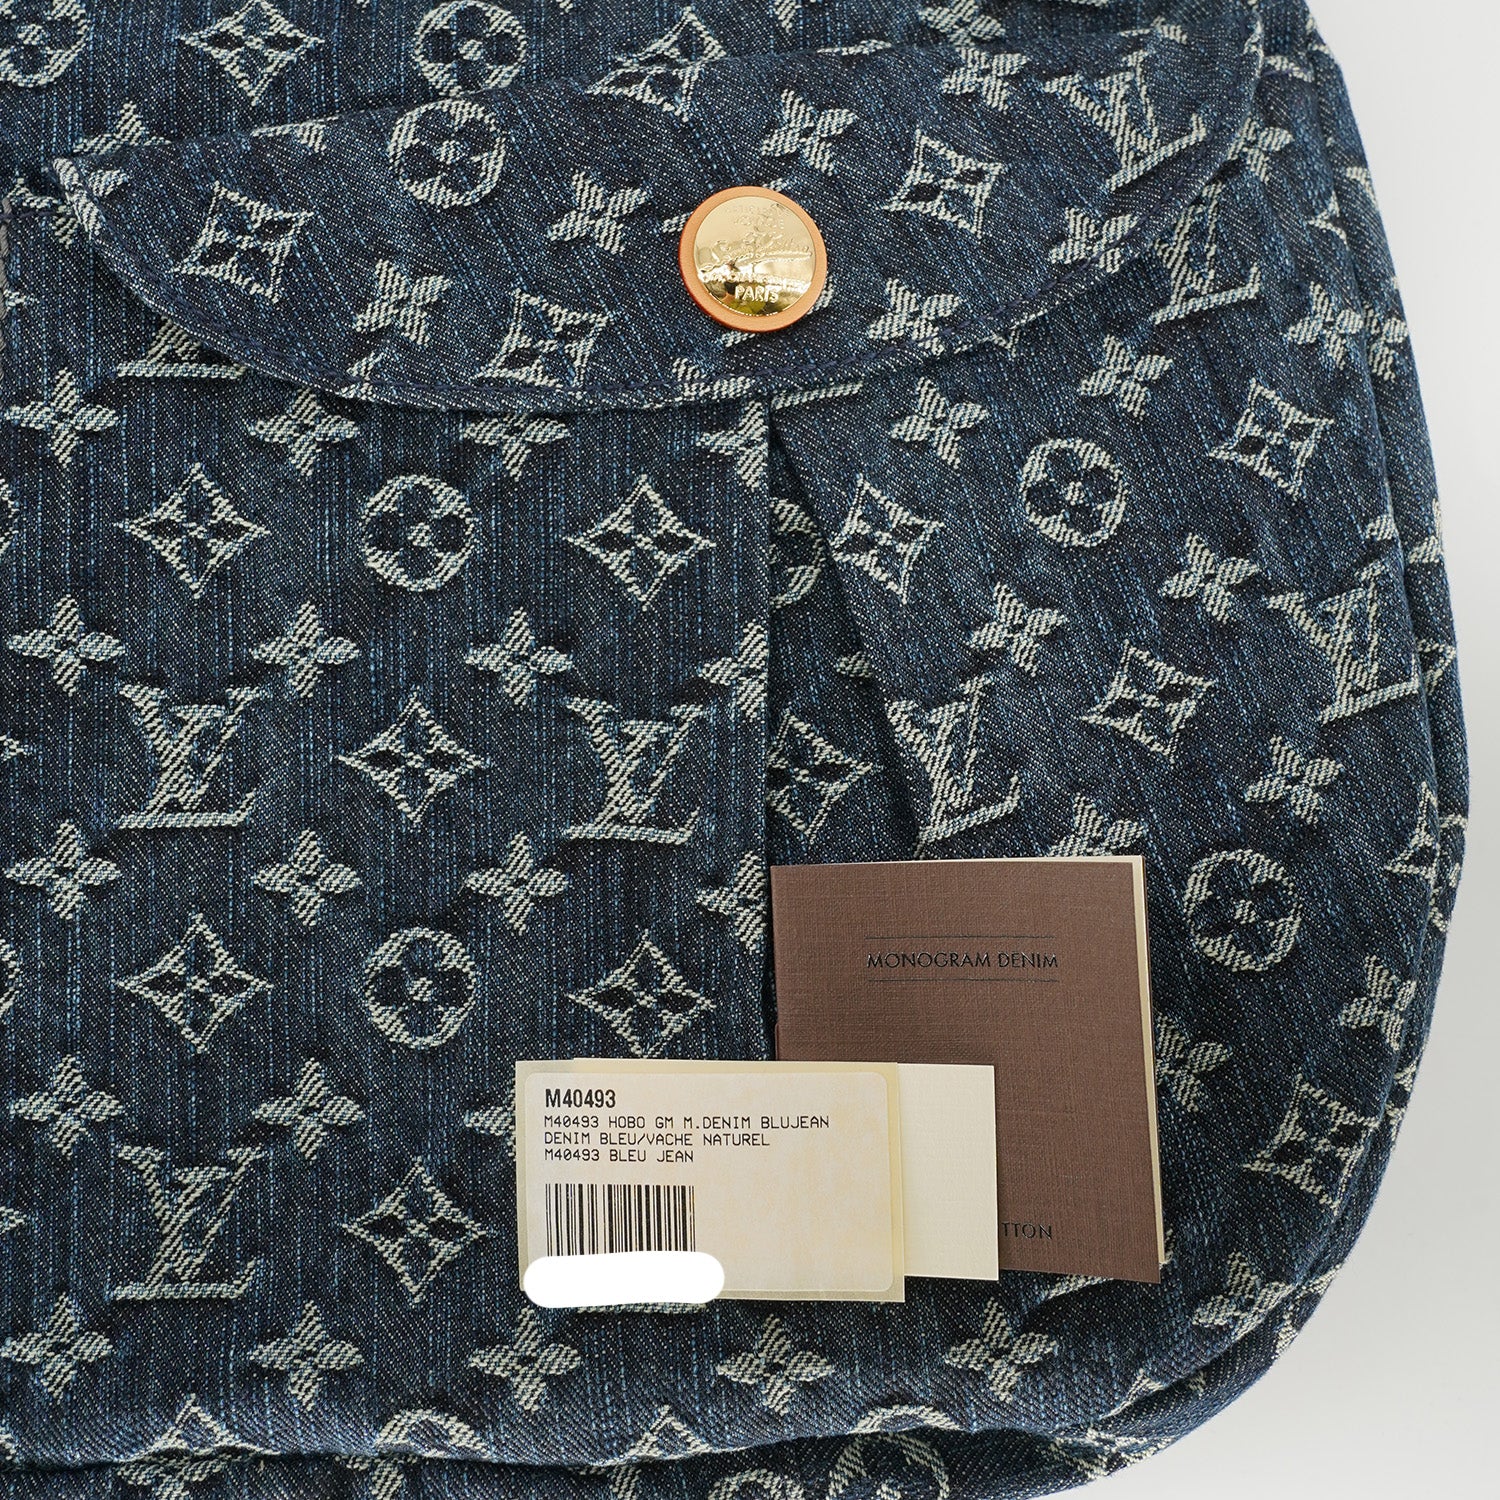 Rare Louis Vuitton LV Limited Edition Red Monogram Denim Jacket